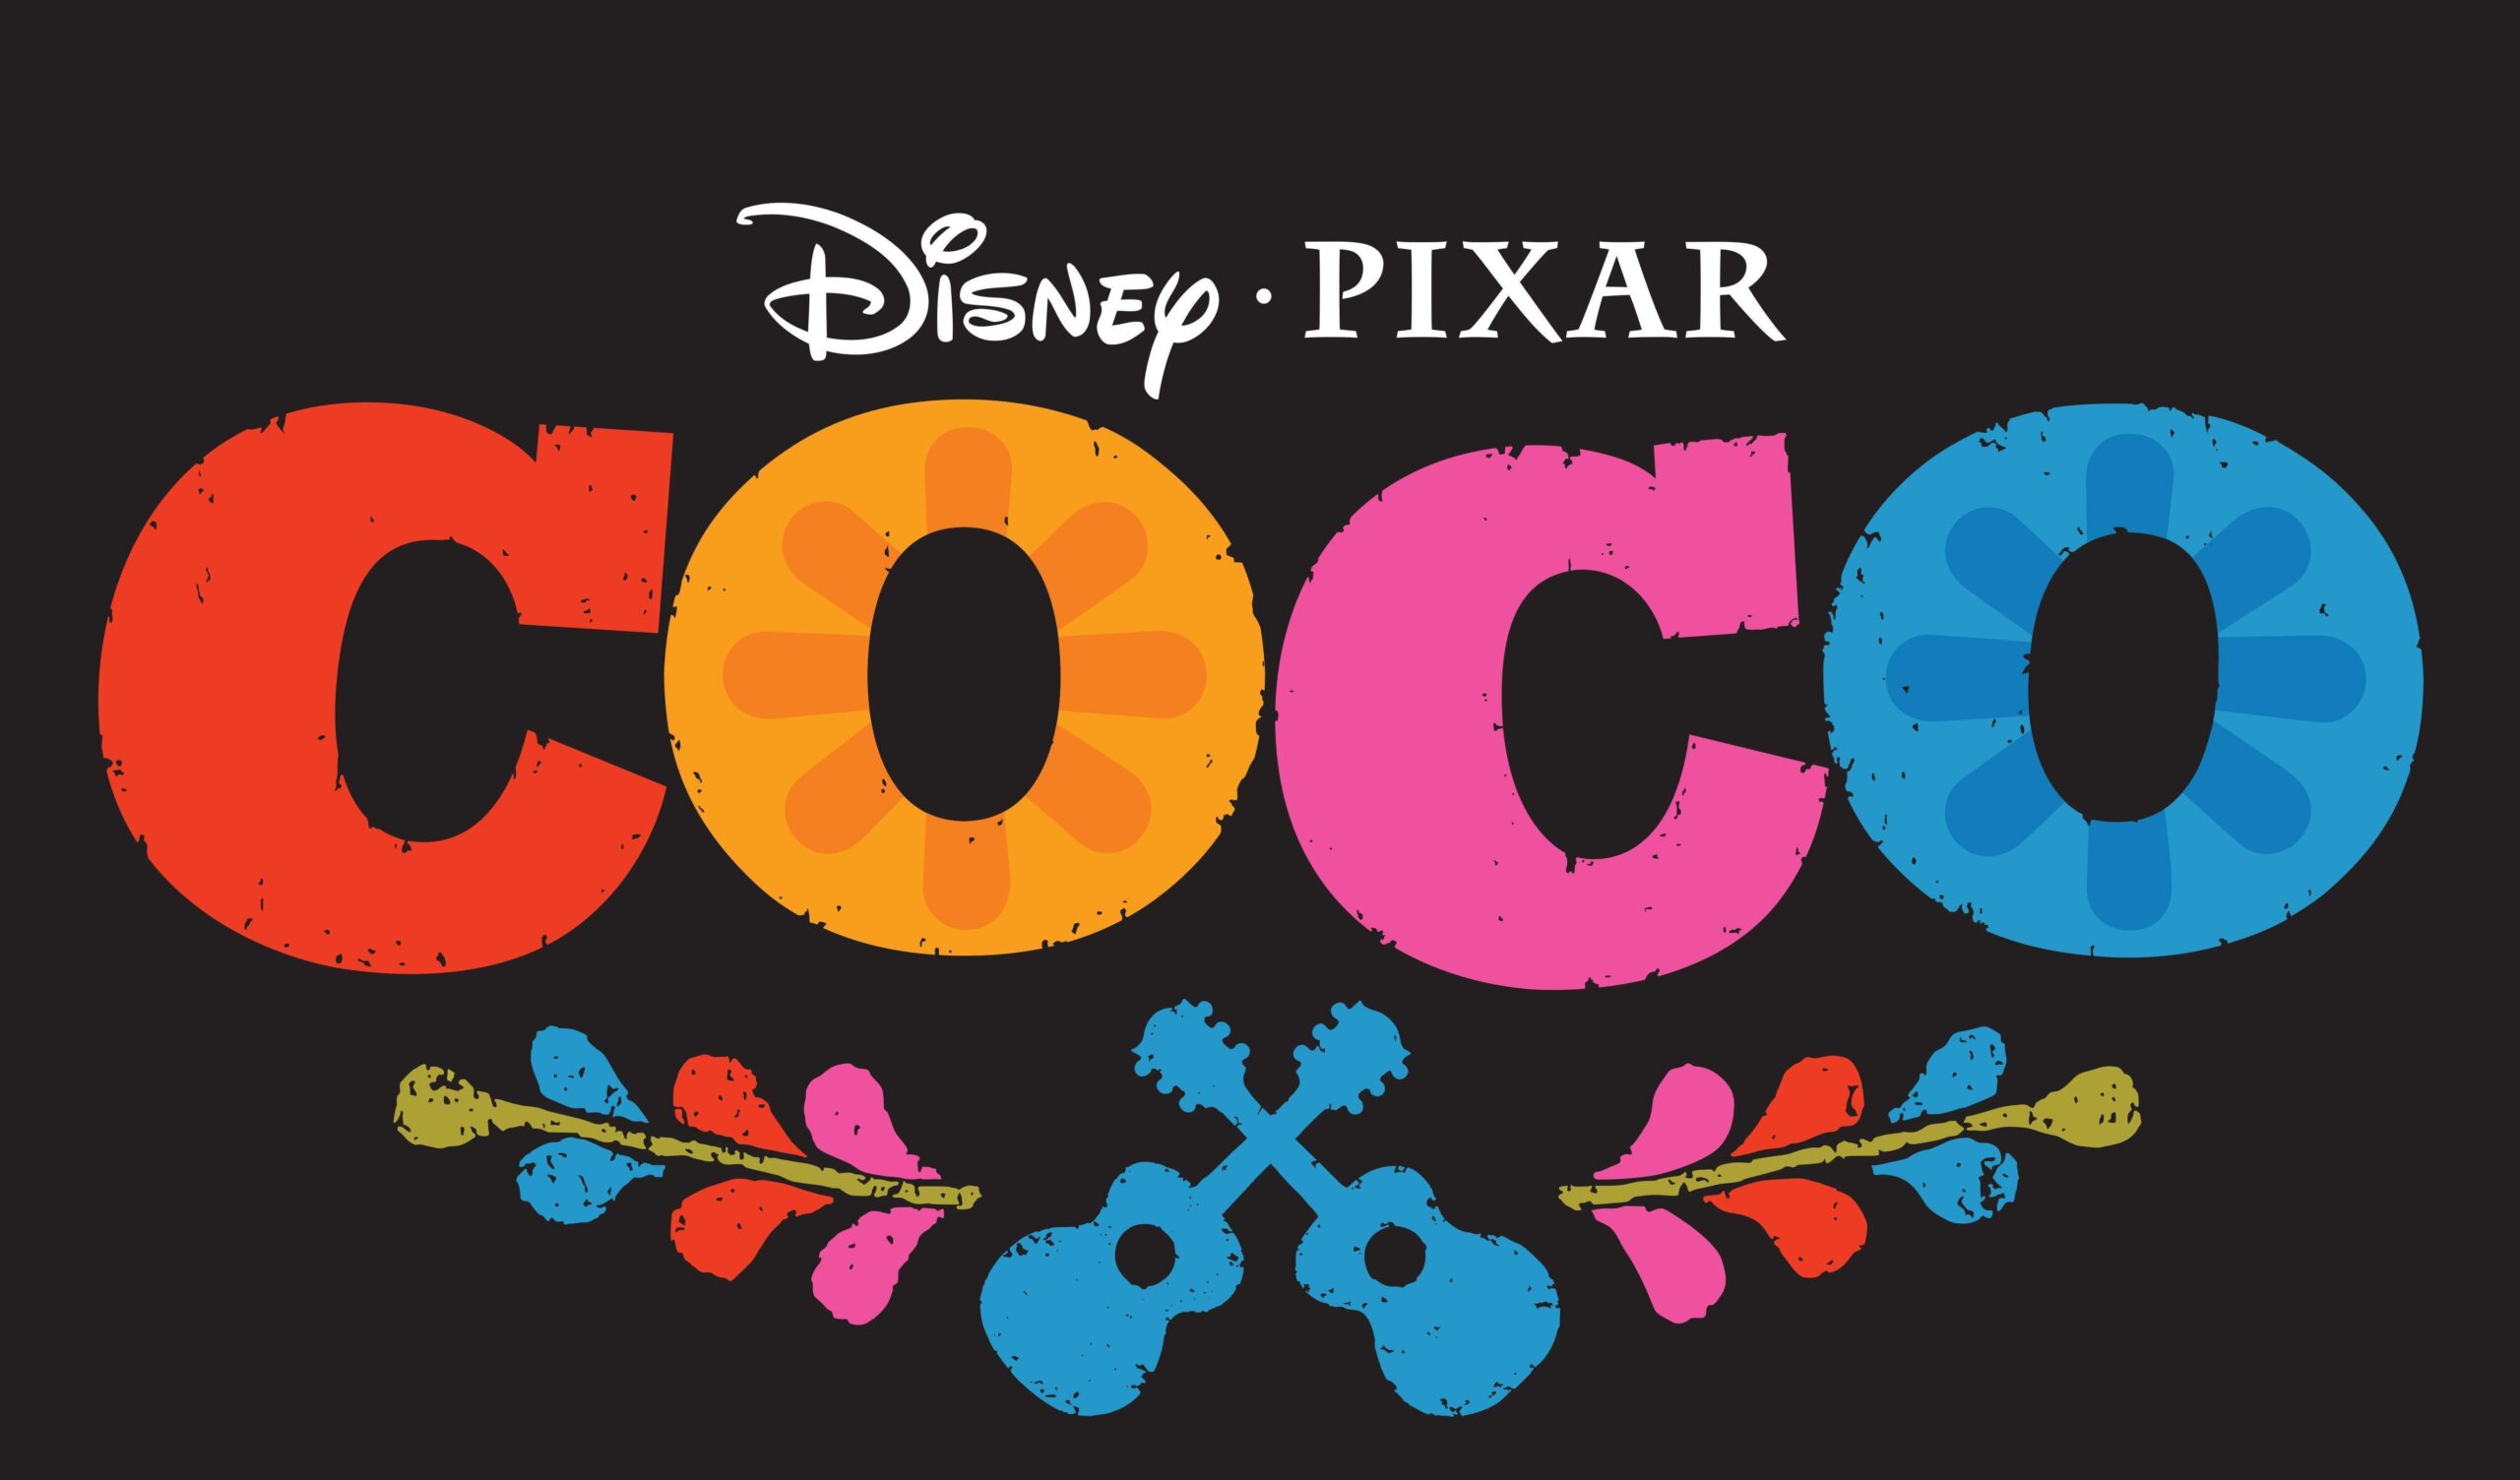 Coco Pixar Free Desktop Wallpaper, Coco Pixar, Cartoons